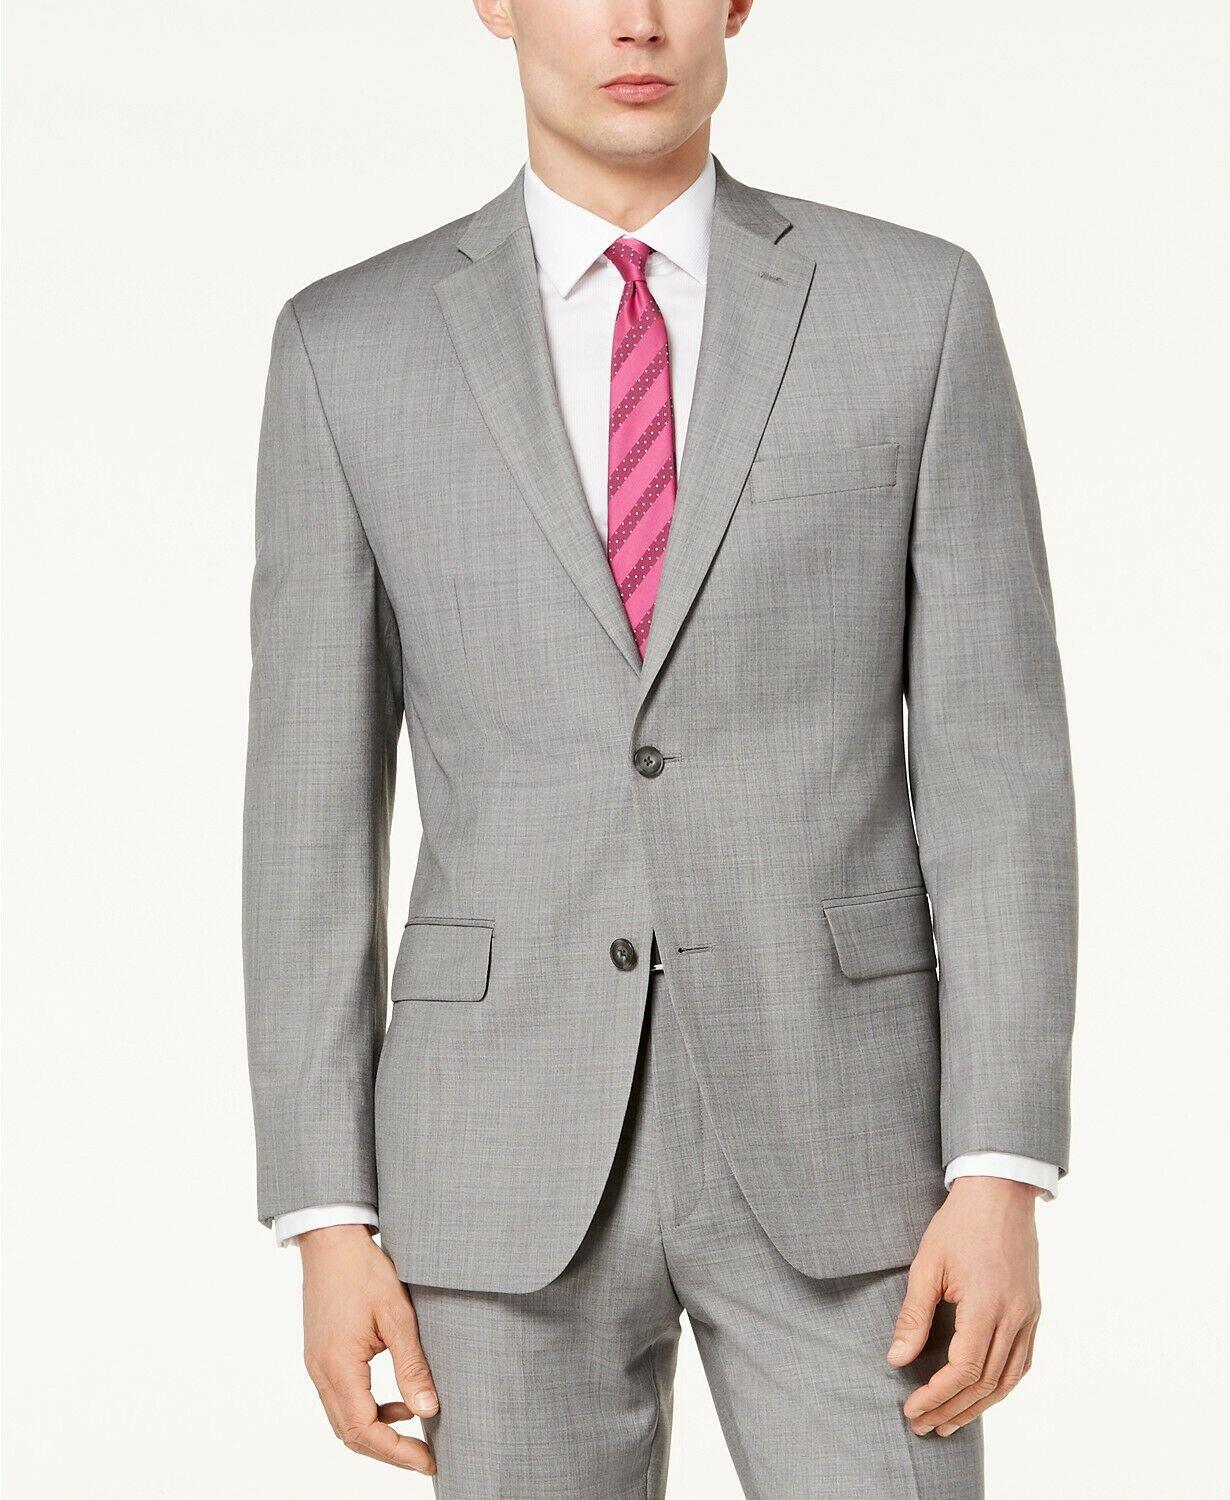 Michael Kors Men's Classic-Fit Airsoft Stretch Grey Suit Jacket 40L Two button - Bristol Apparel Co